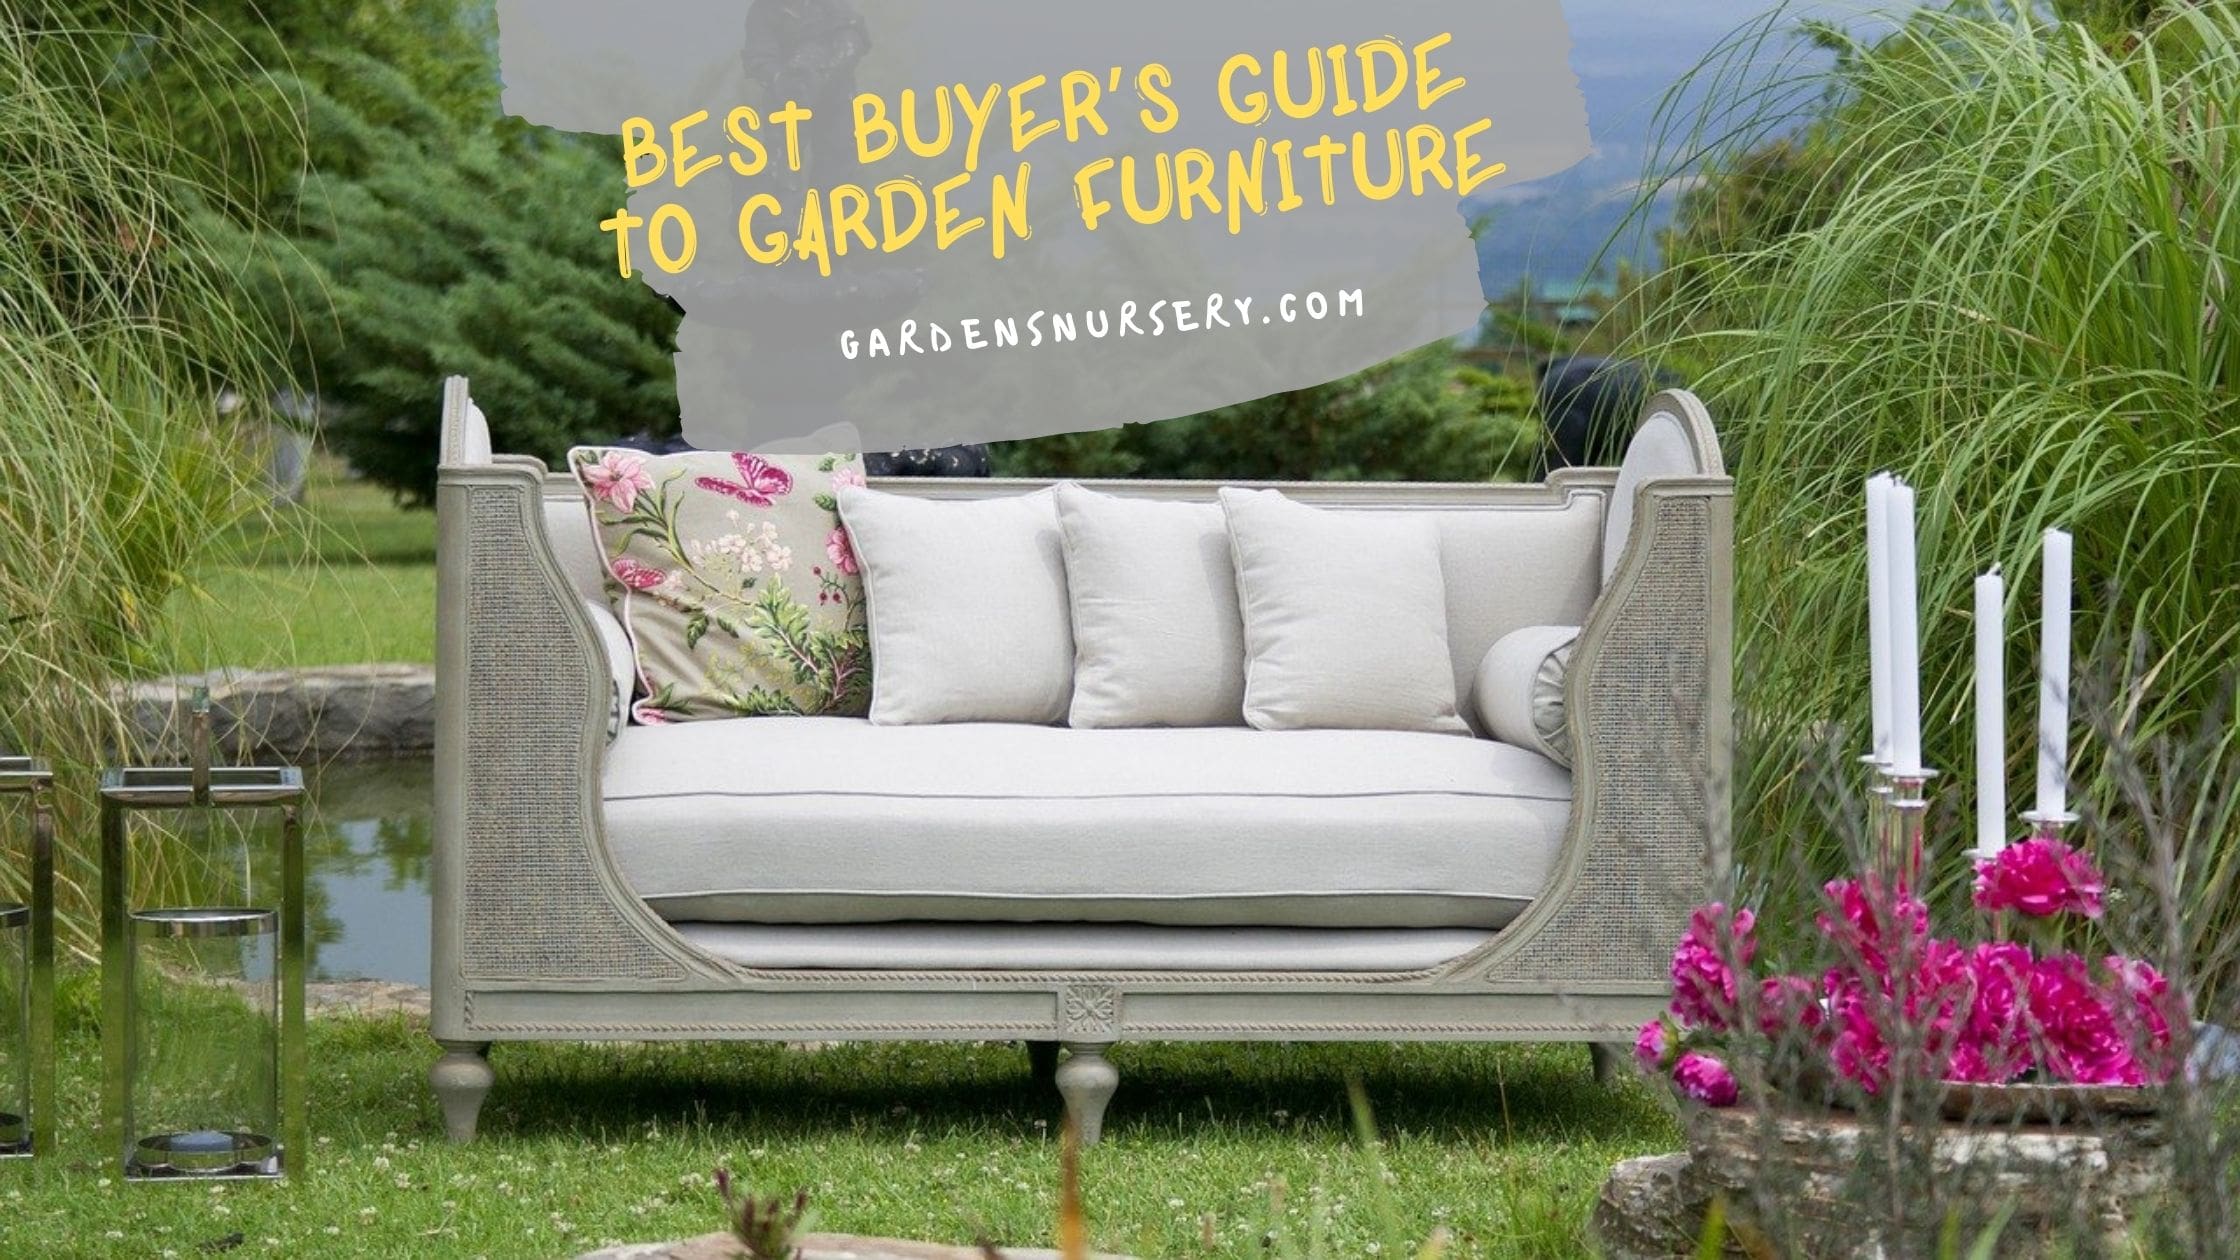 Best Buyer’s Guide to Garden Furniture